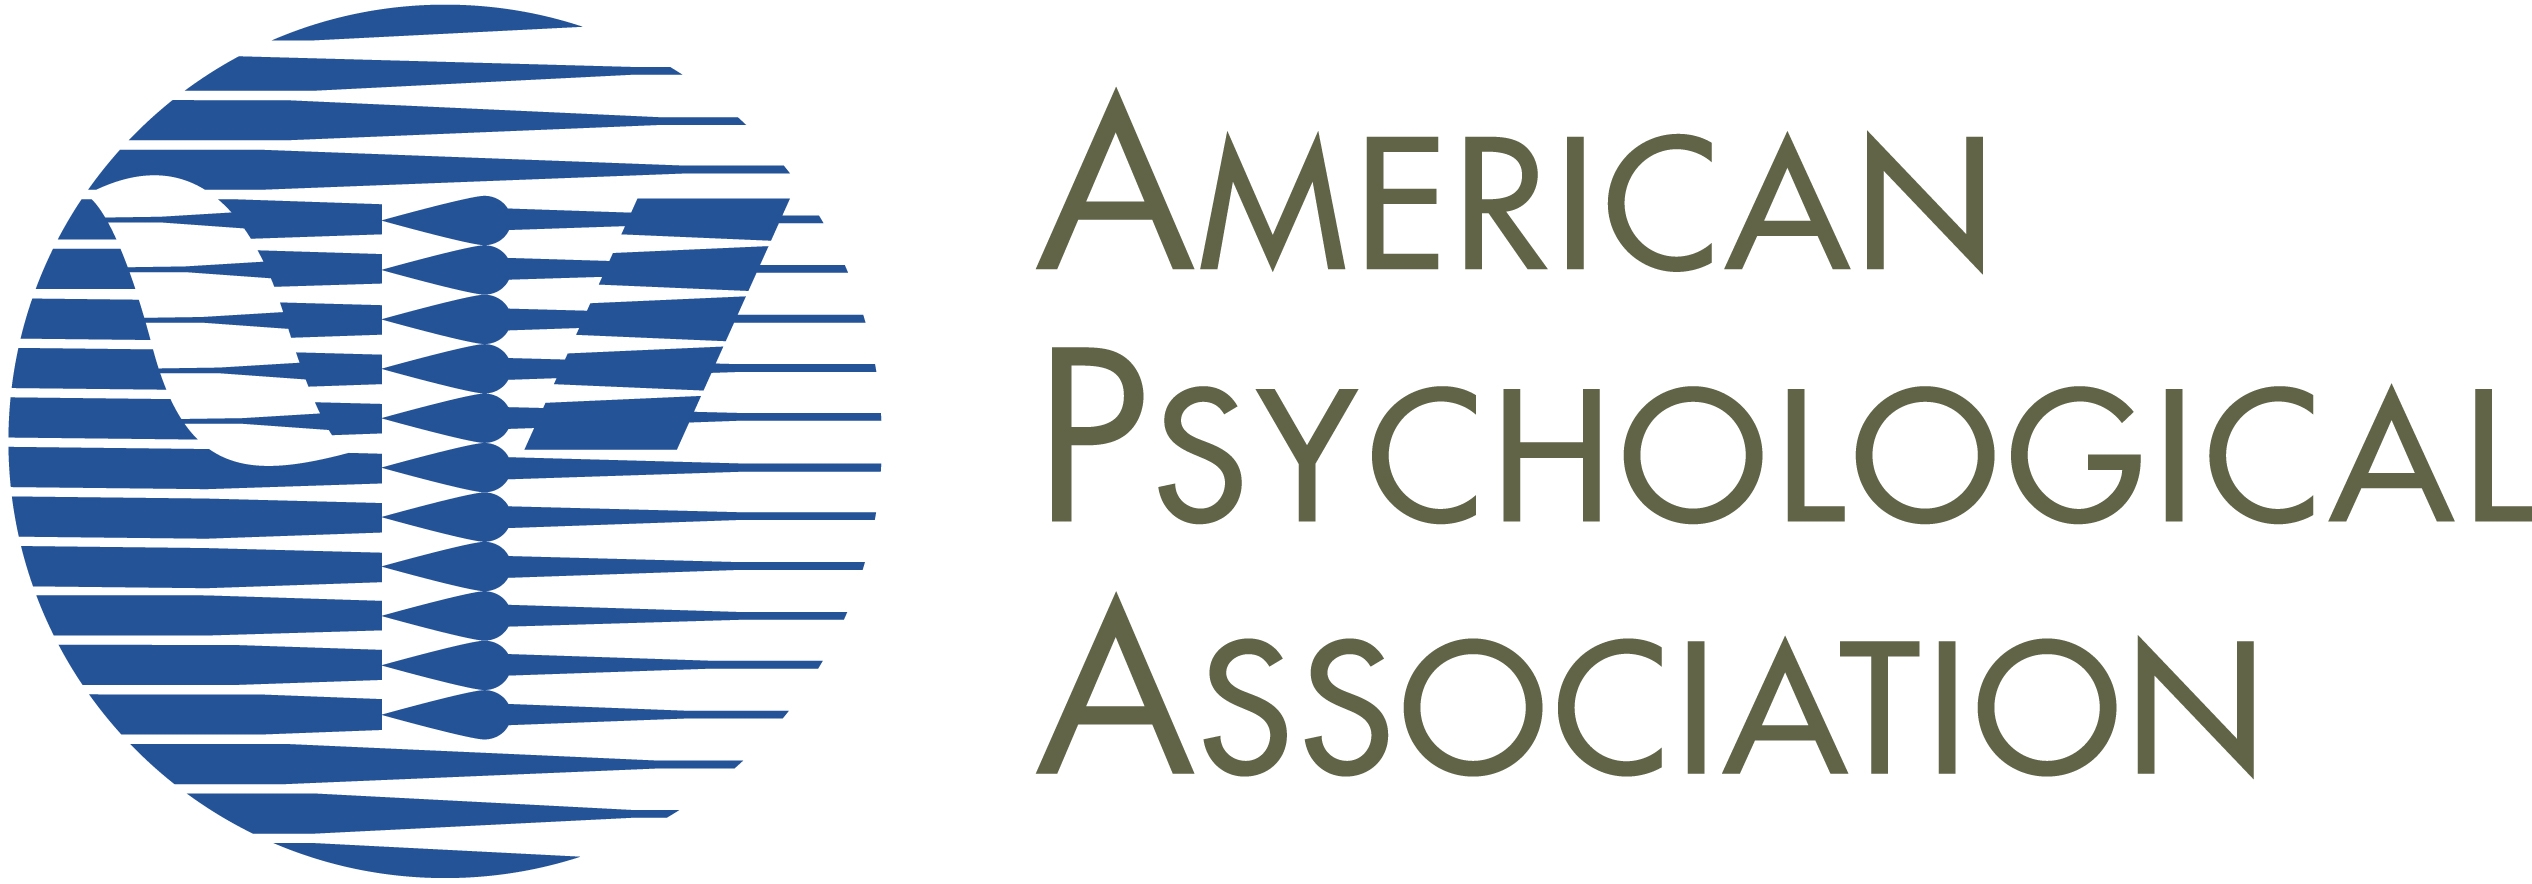 American Psychological Association Company Logo